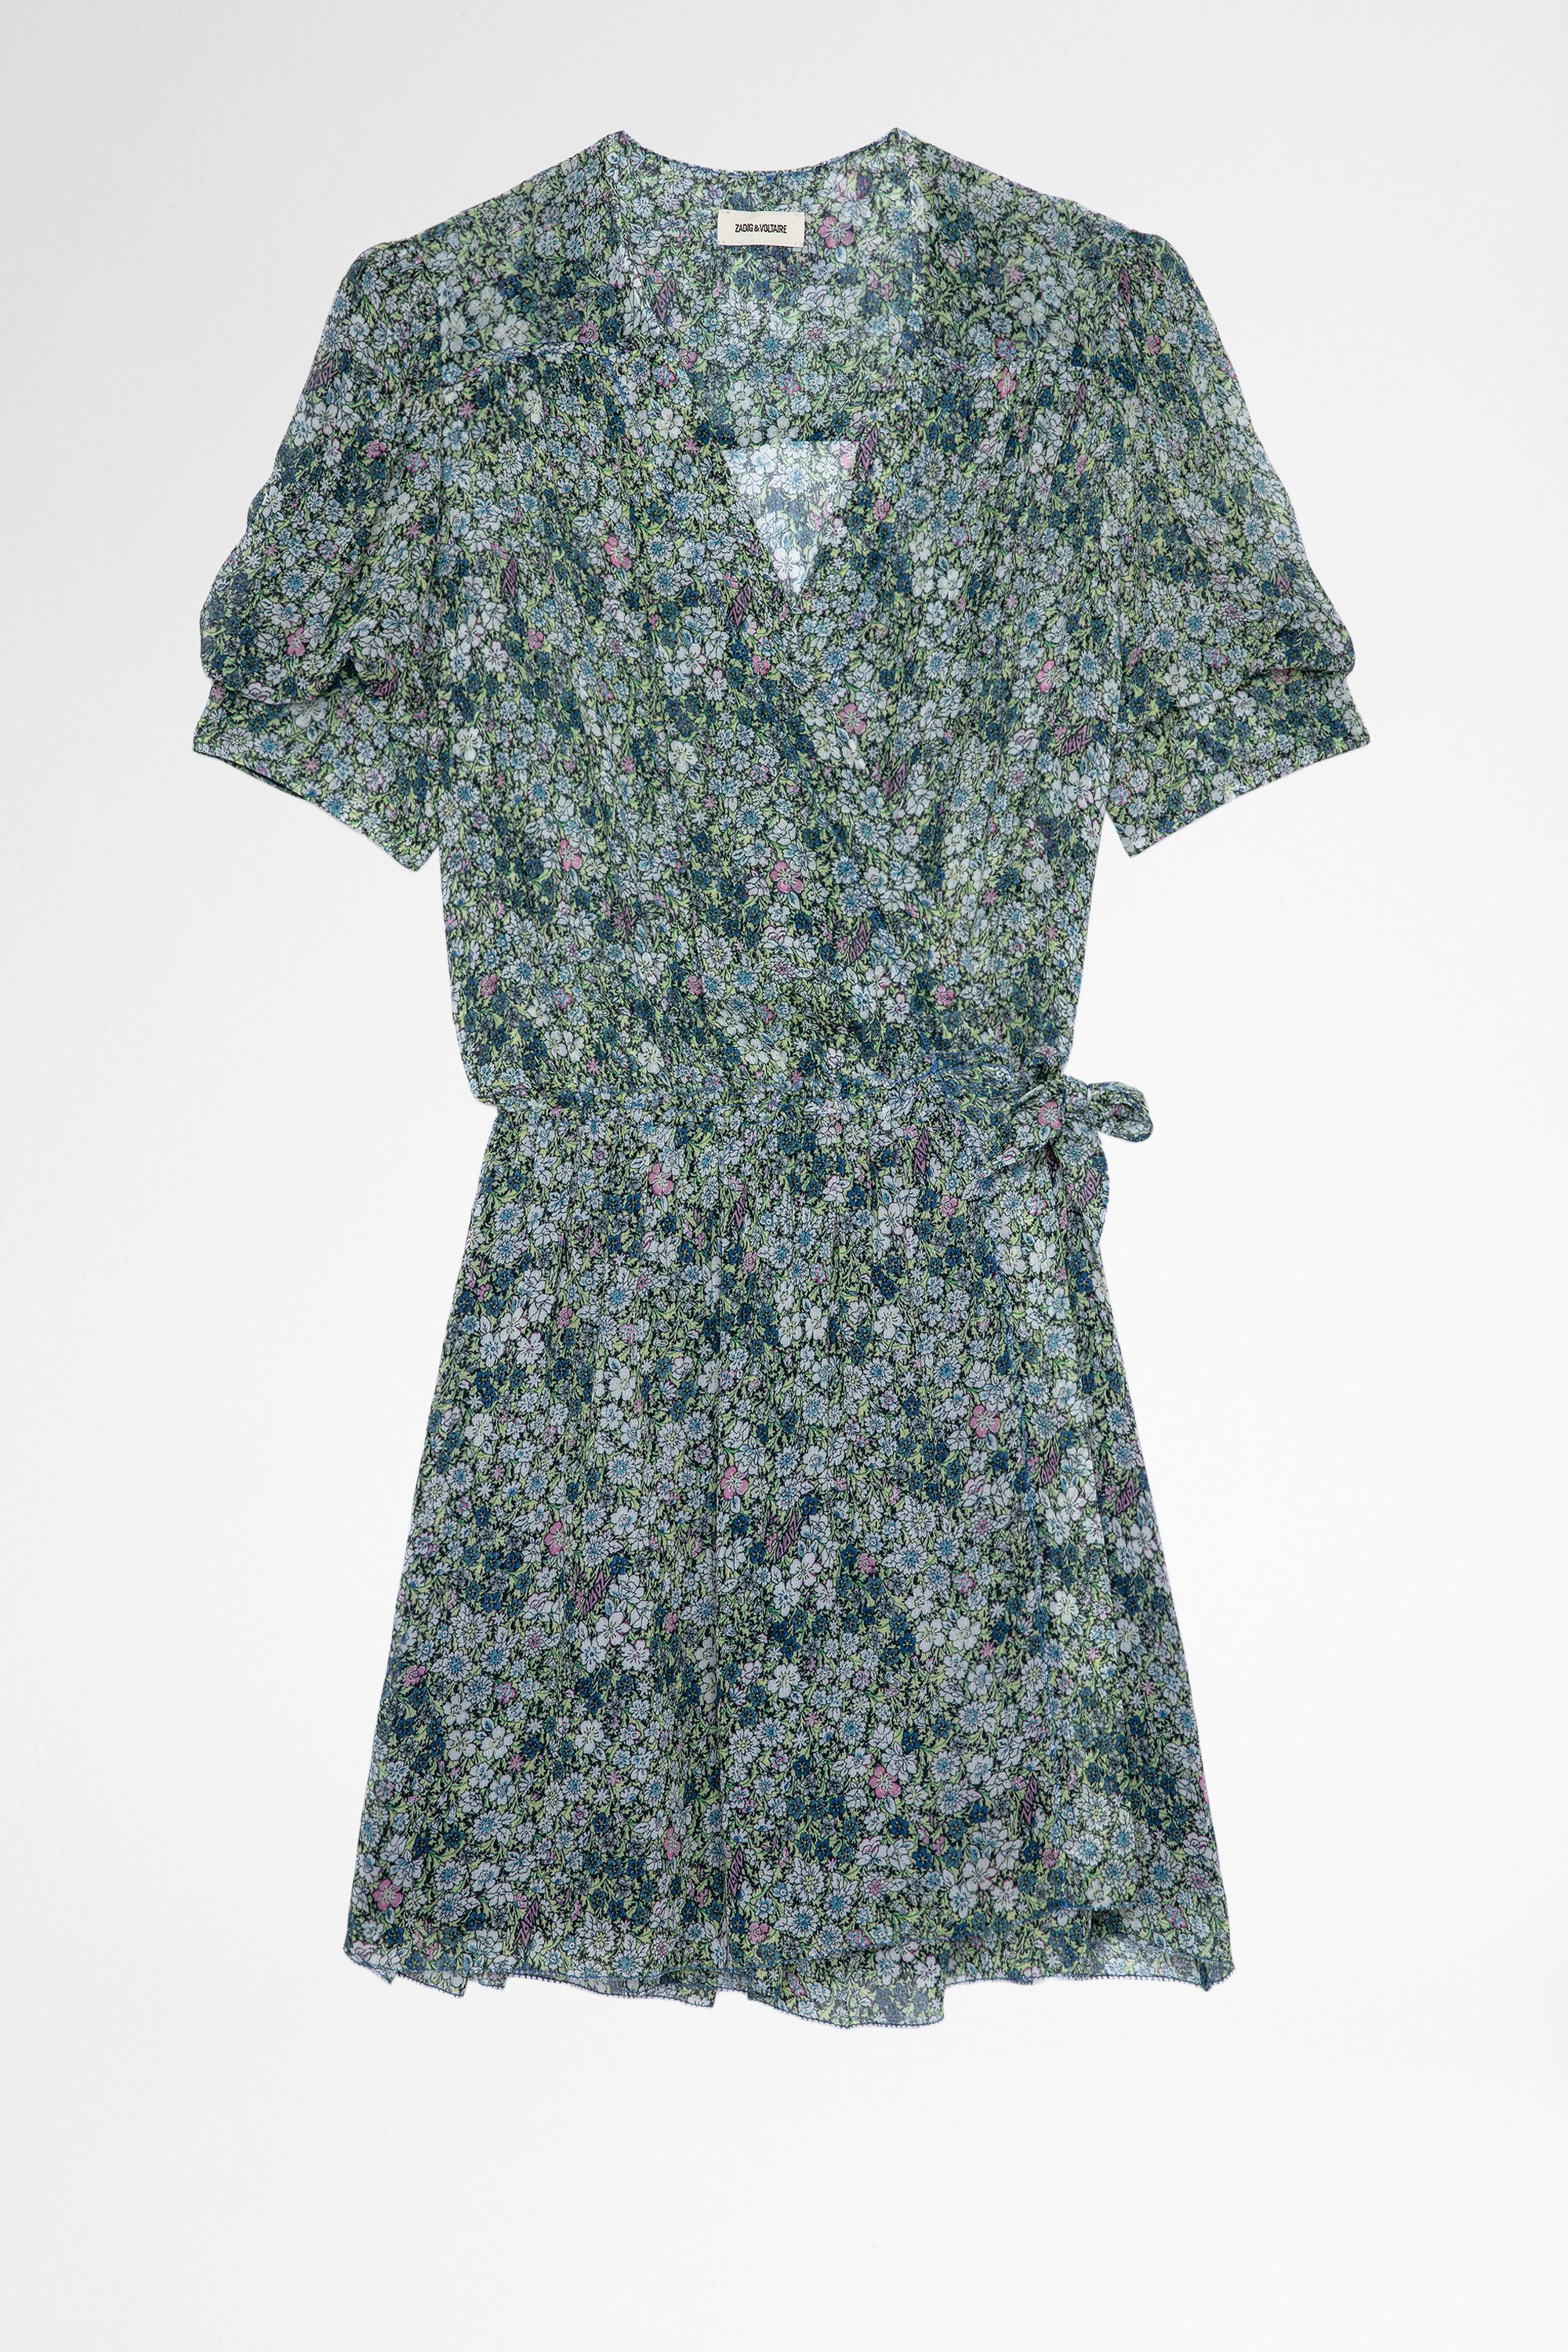 Betty ドレス Women’s floral print mini dress in green